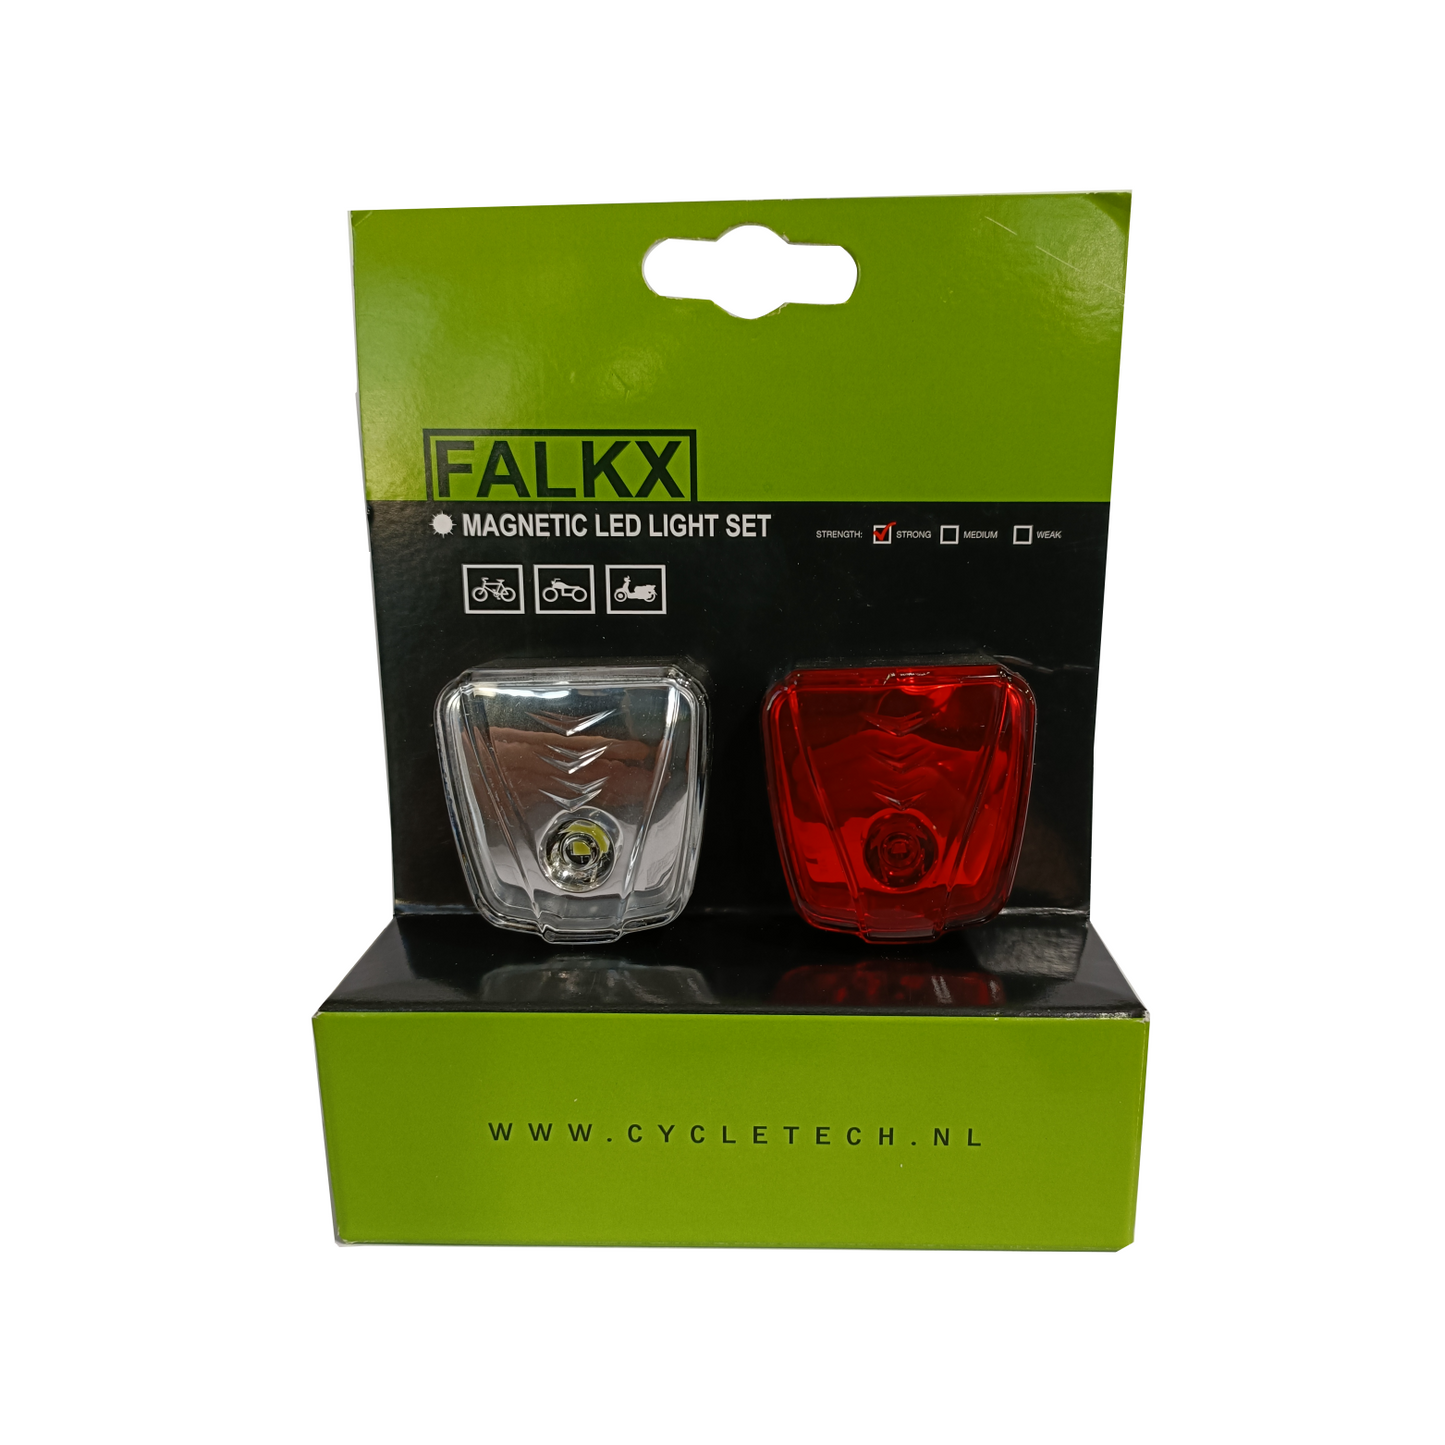 Falkx Magnet Verlictghghing. Ajuste delantero y trasero. 0.5W LED (paquete colgante)